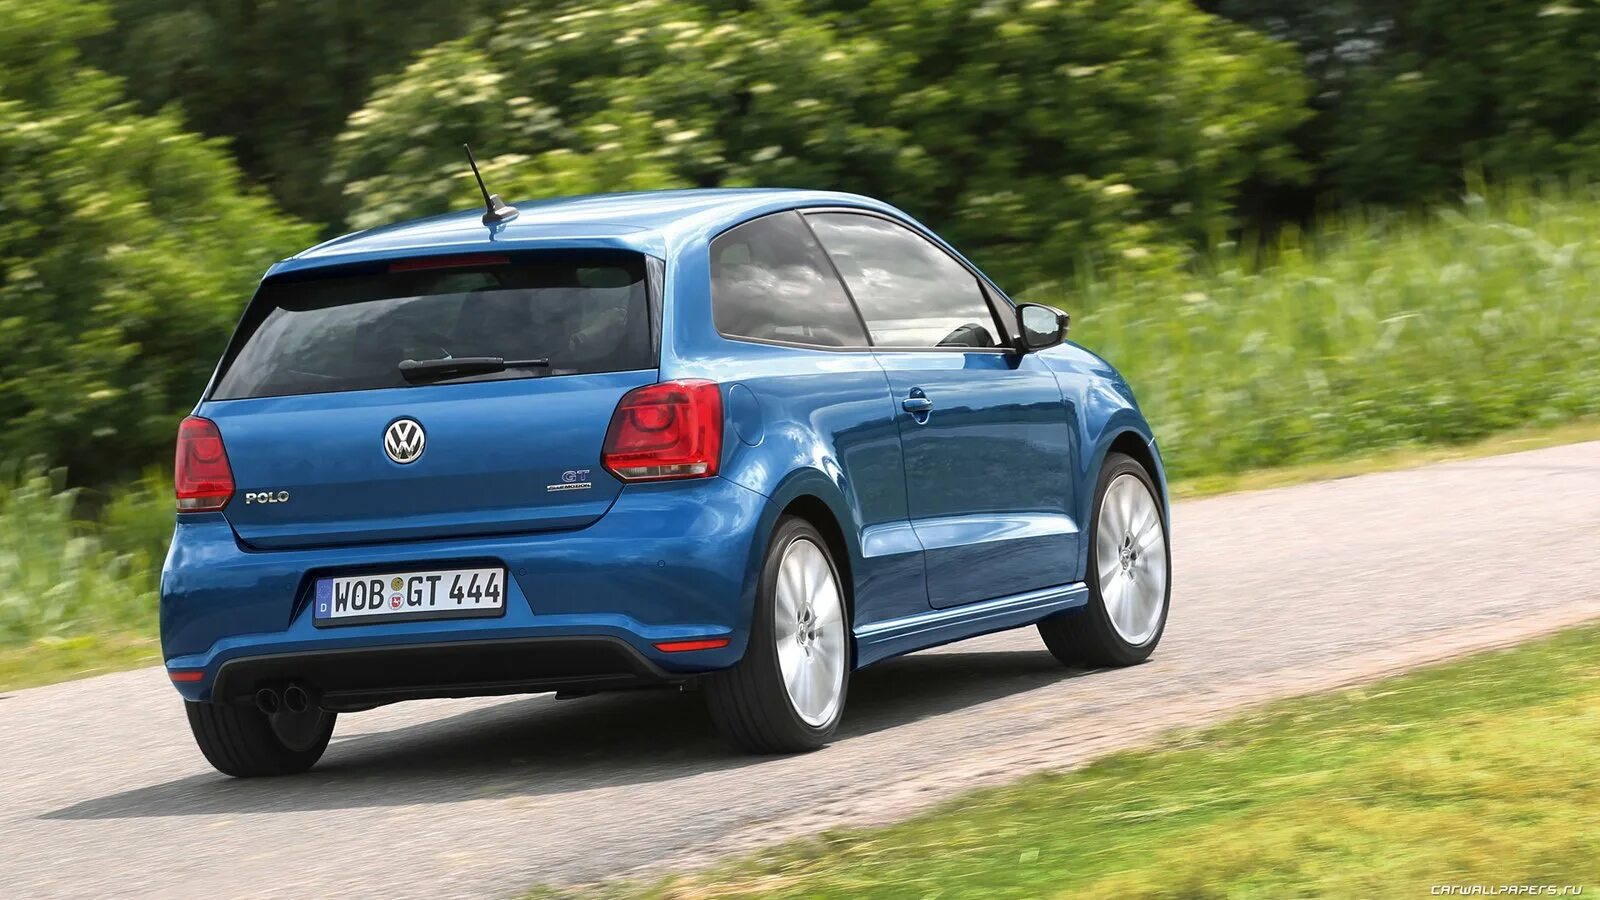 Volkswagen hatchback. VW Polo Blue gt. Volkswagen Polo Hatchback. Фольксваген поло gt хэтчбек. Поло gt хэтчбек Фольксваген хэтчбек.